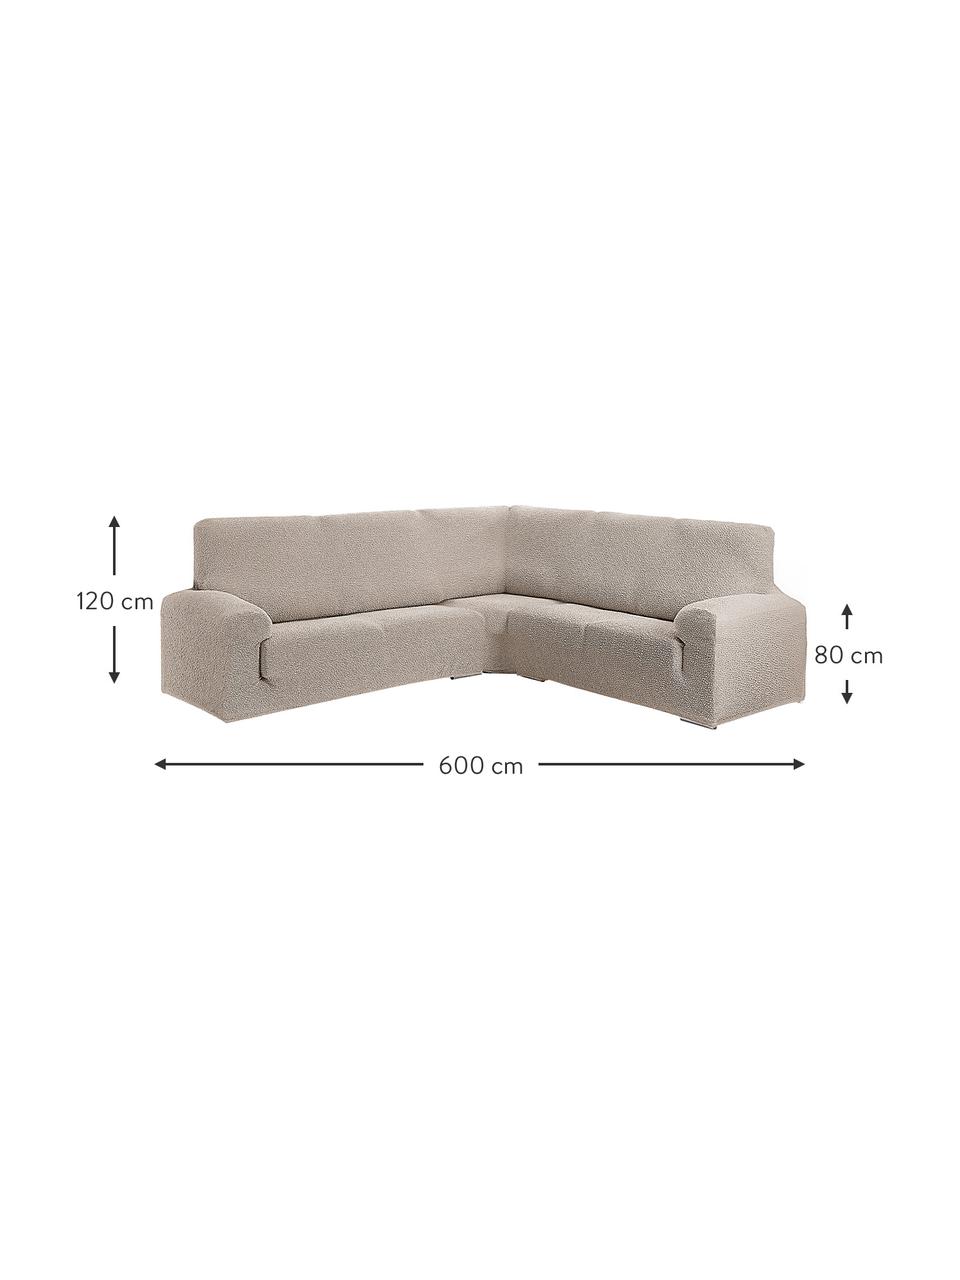 Funda de sofá rinconero Roc, 55% poliéster, 35% algodón, 10% elastómero, Crema, An 600 x Al 120 cm